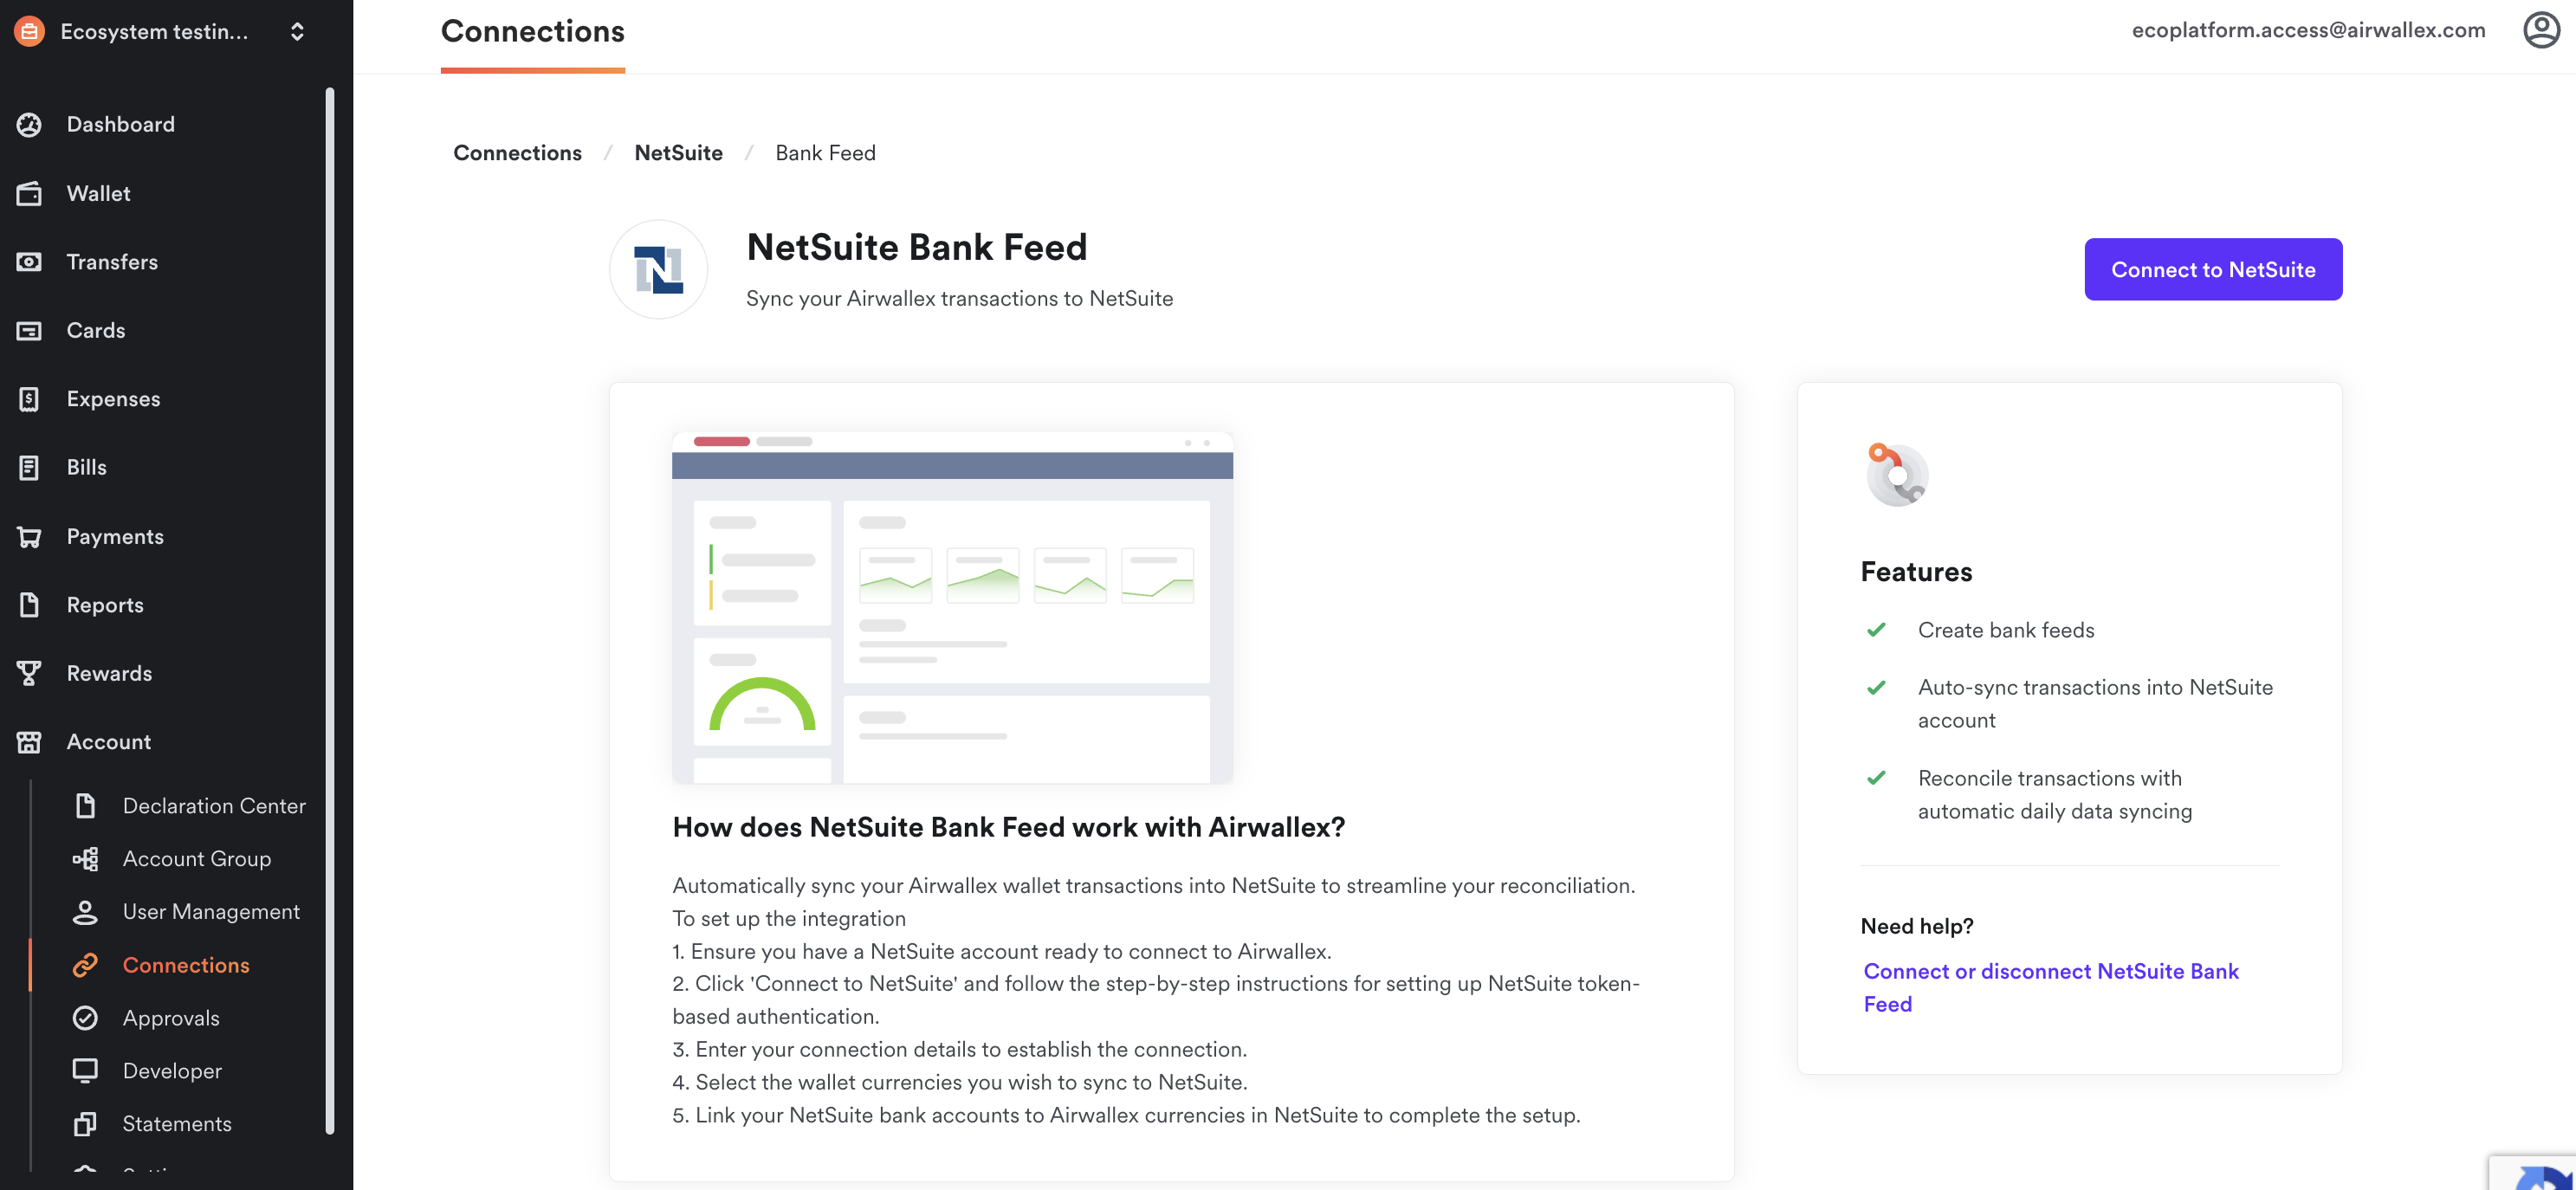 NetSuite_Bank_Feed_homescreen.png